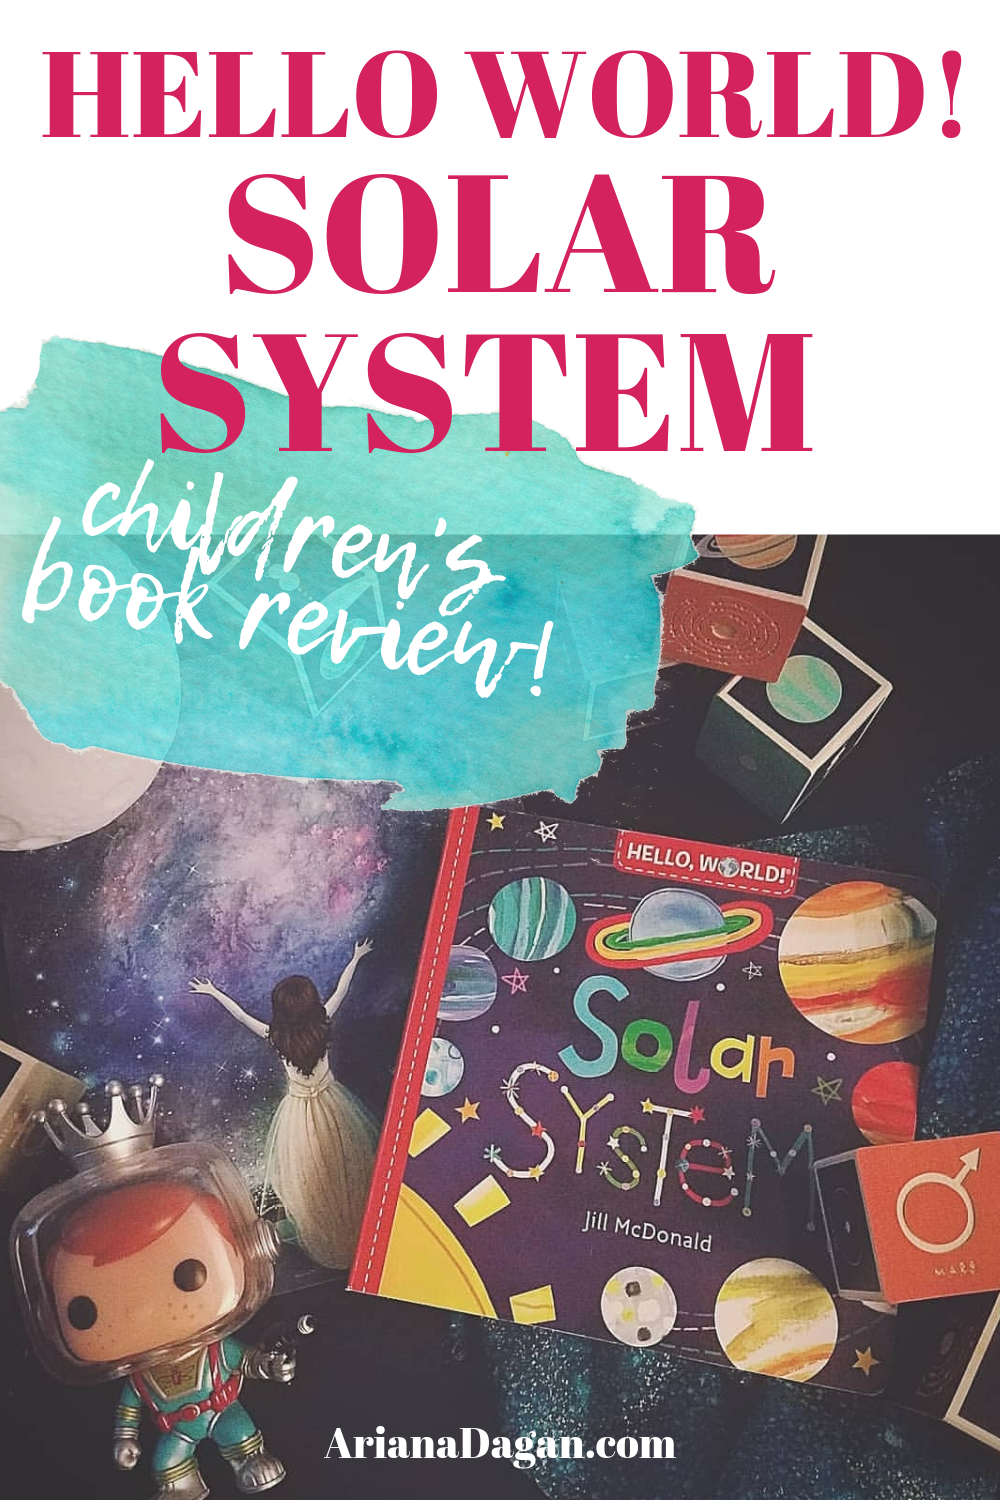 Hello World Solar System Children's Book Review by Ariana Dagan